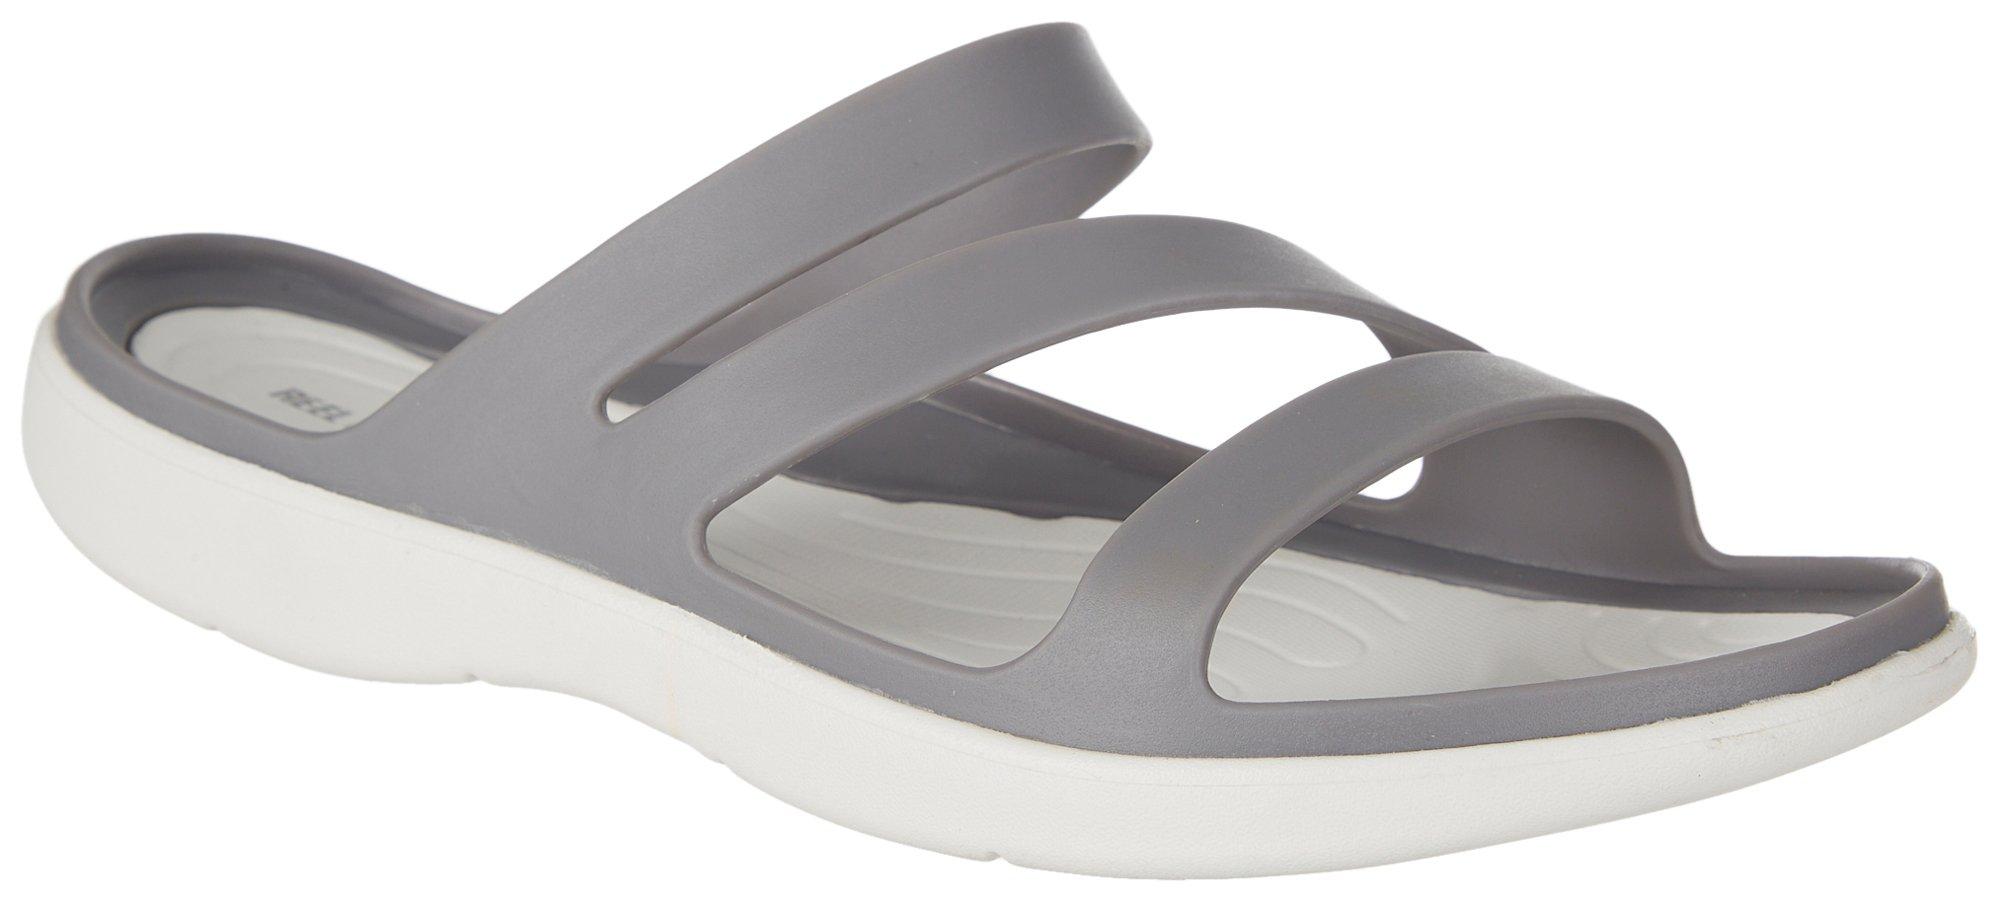 Reel Legends Womens Skimmer Sandals - Gray - 9 M